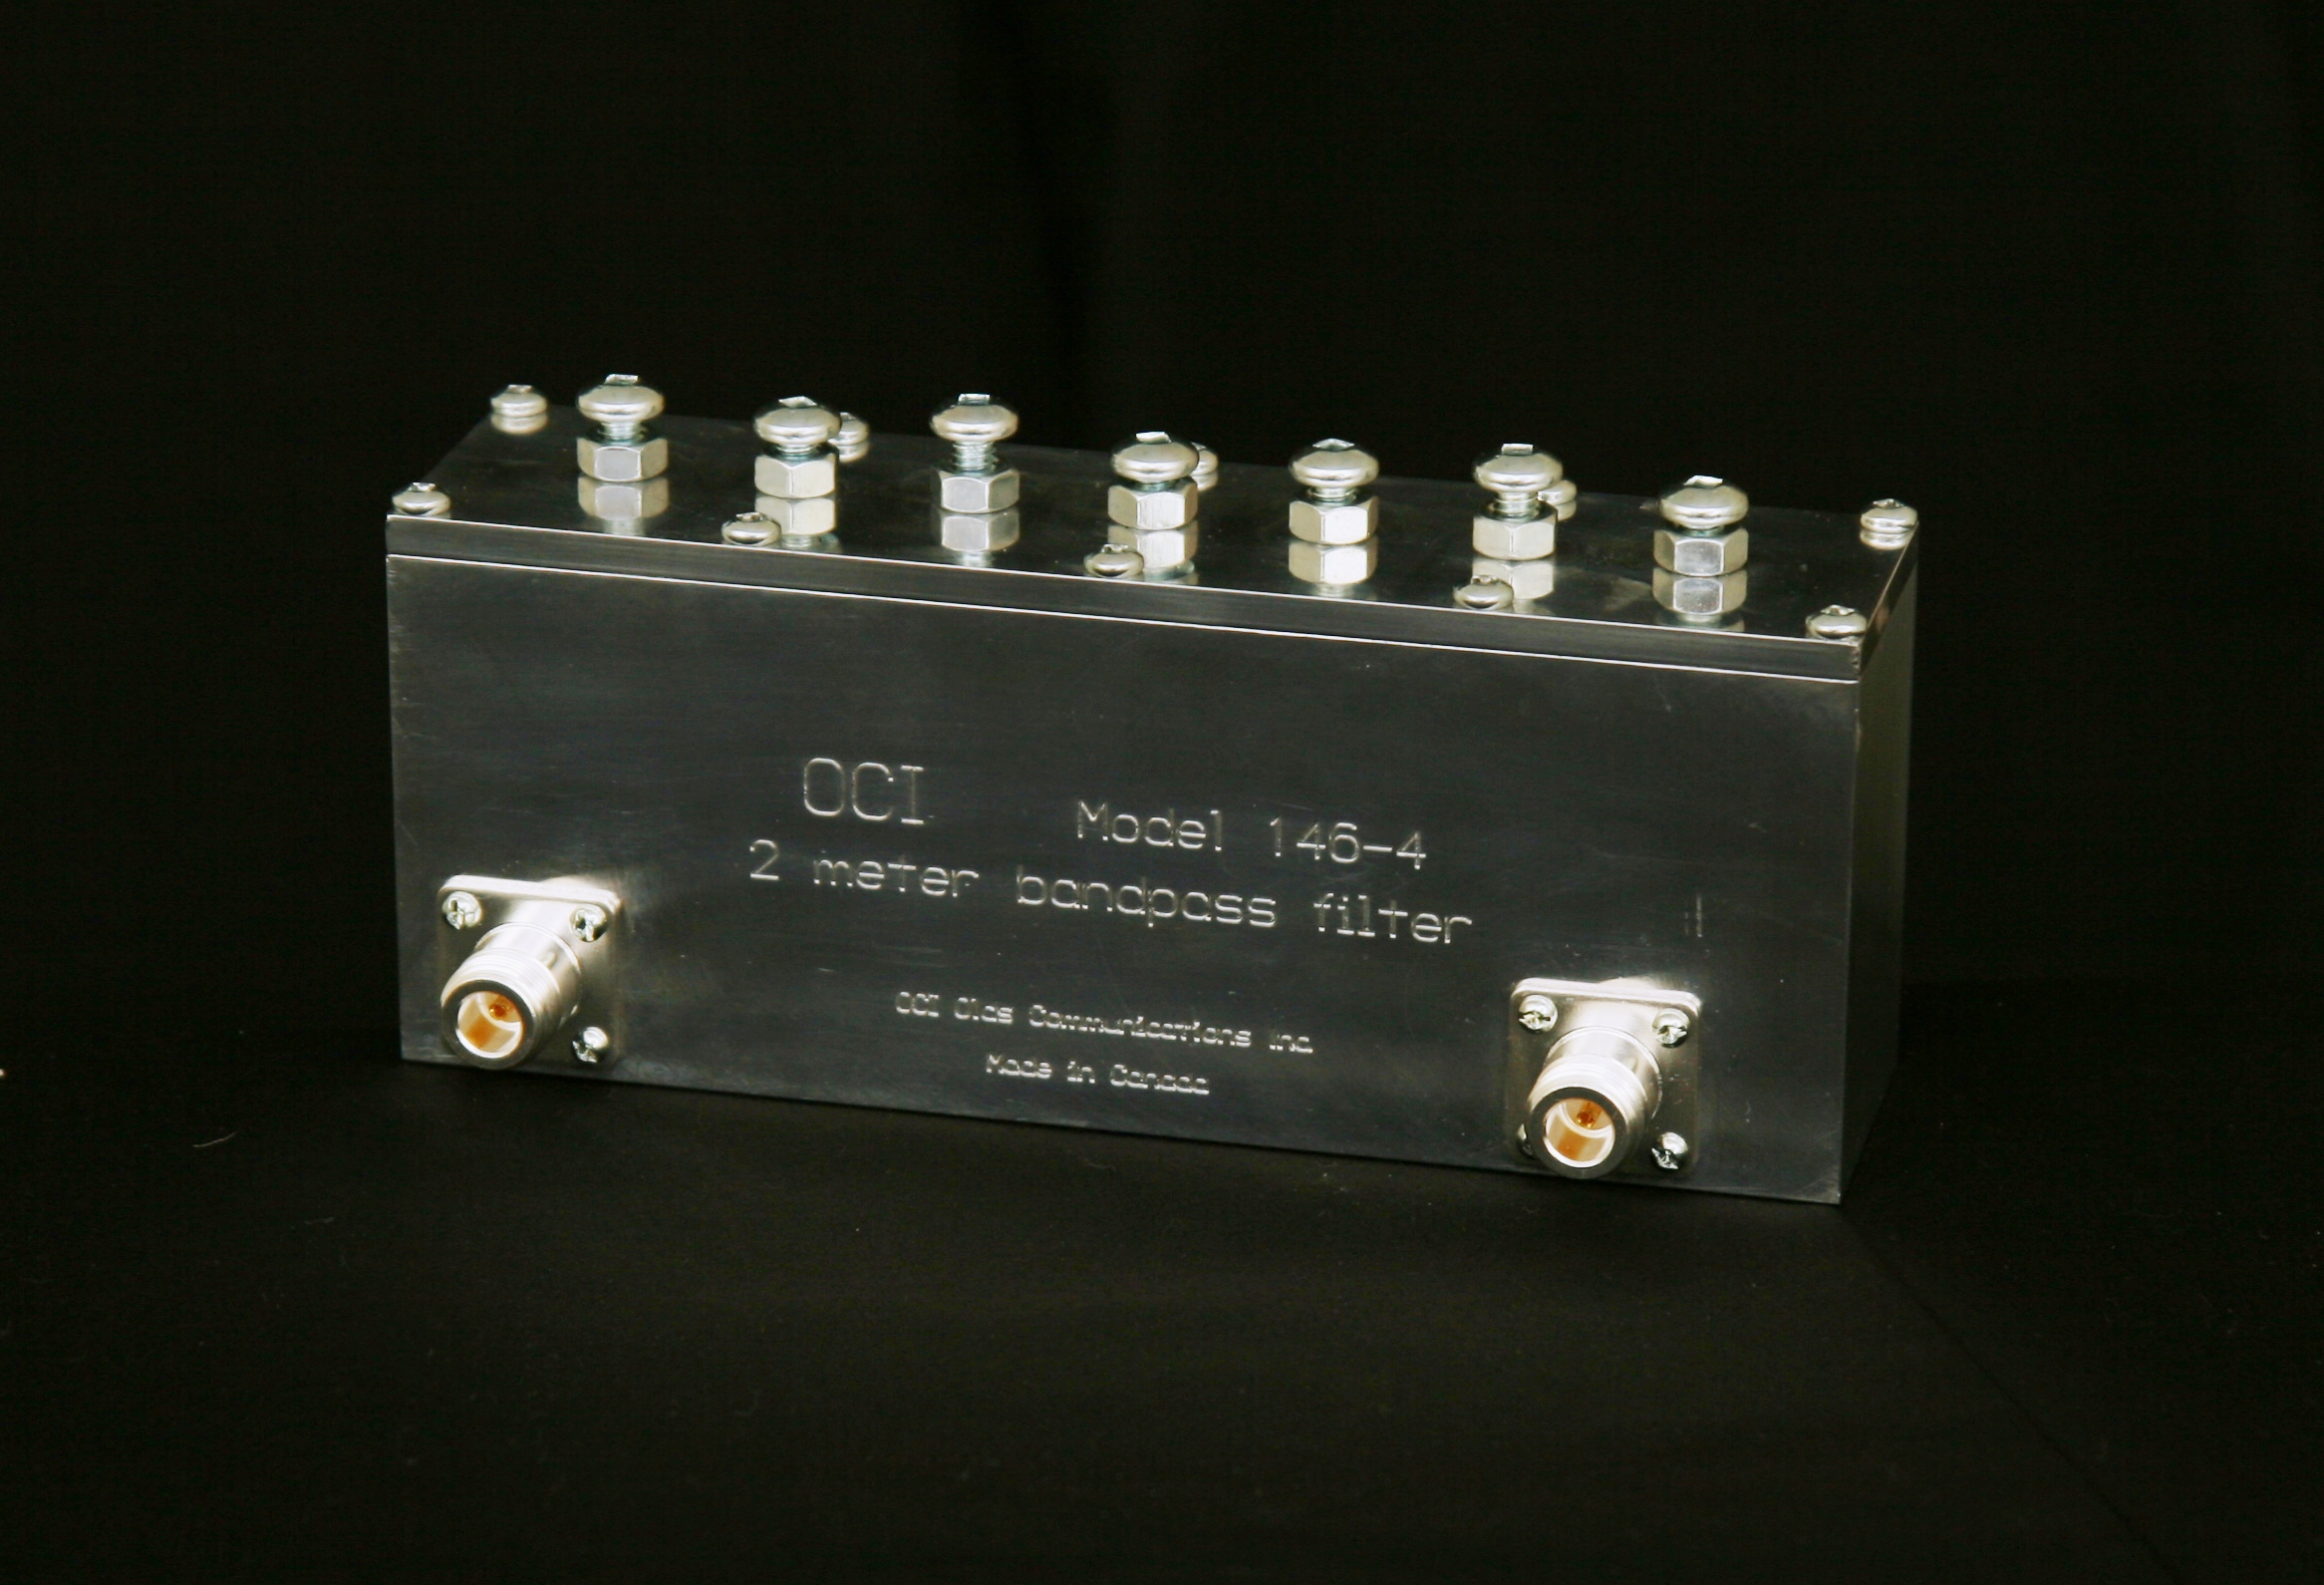 OCI Model 146-4 2 meter bandpass filter picture